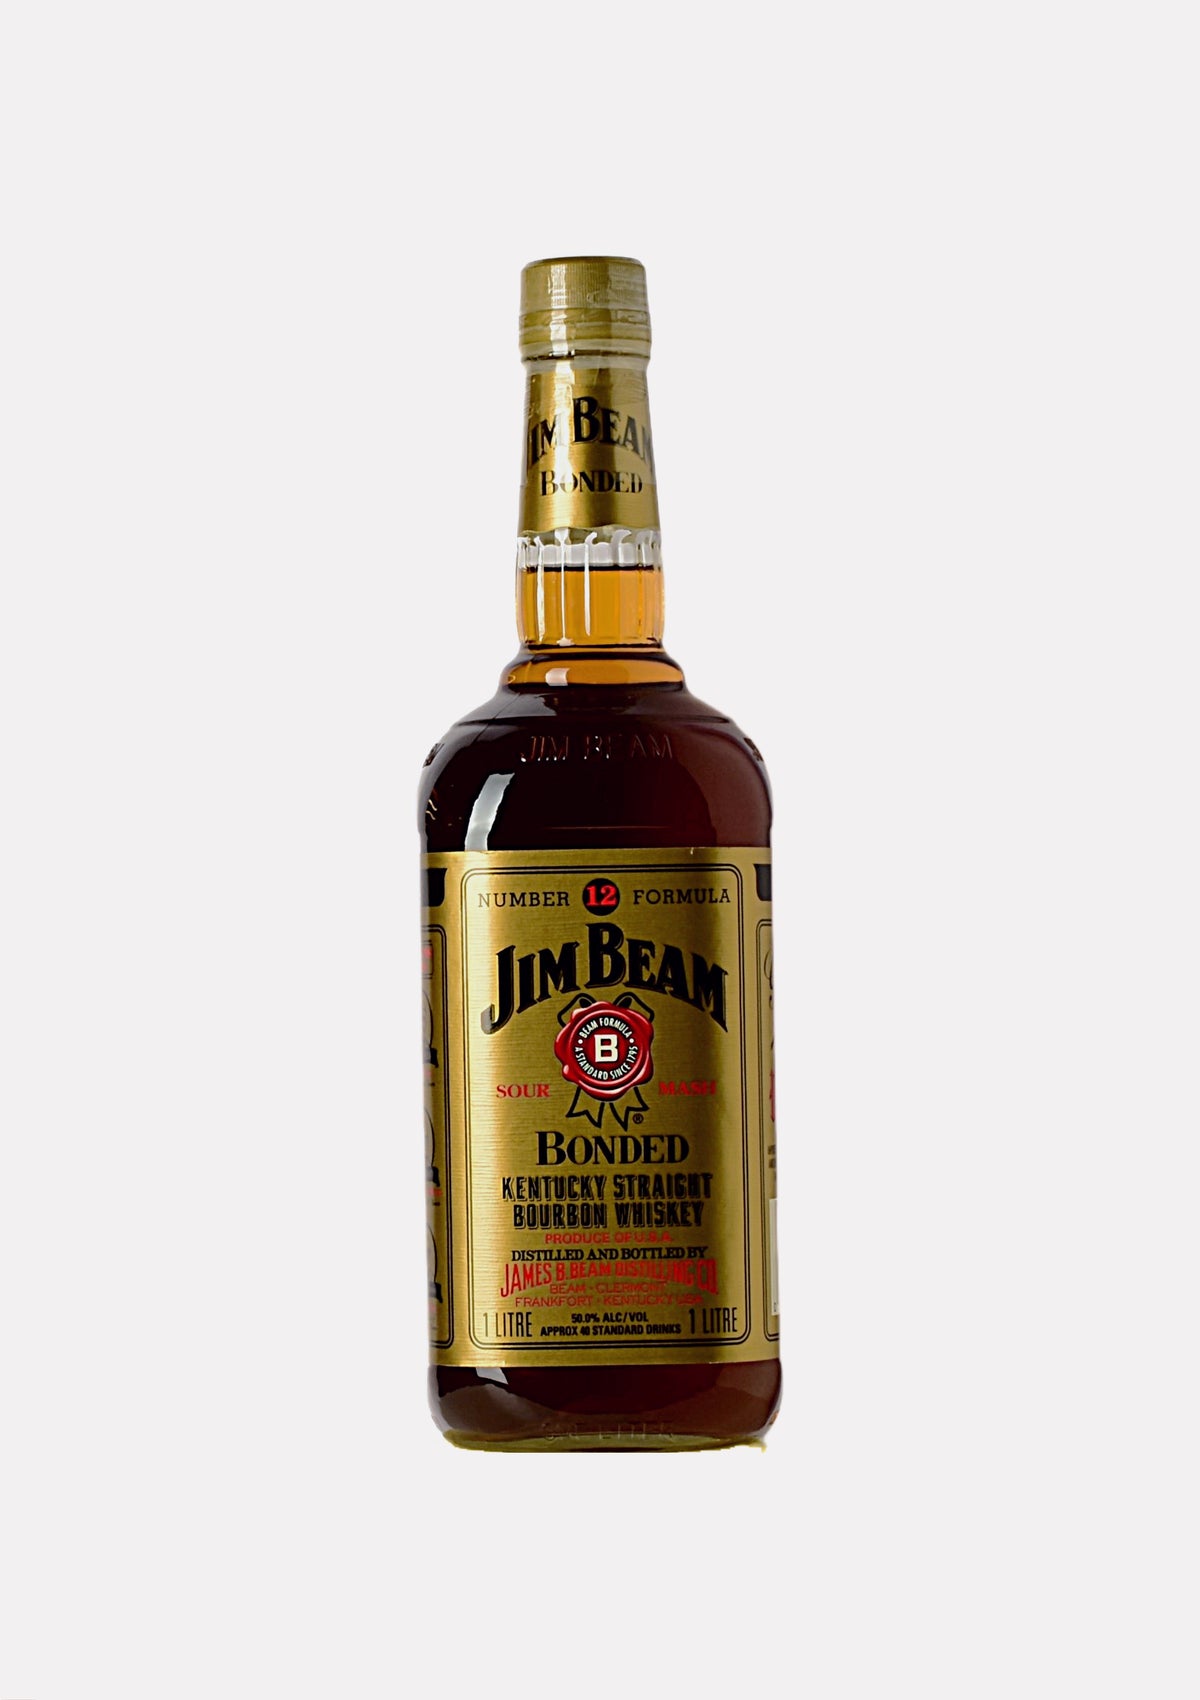 Jim Beam Bonded Kentucky Straight Bourbon Whiskey